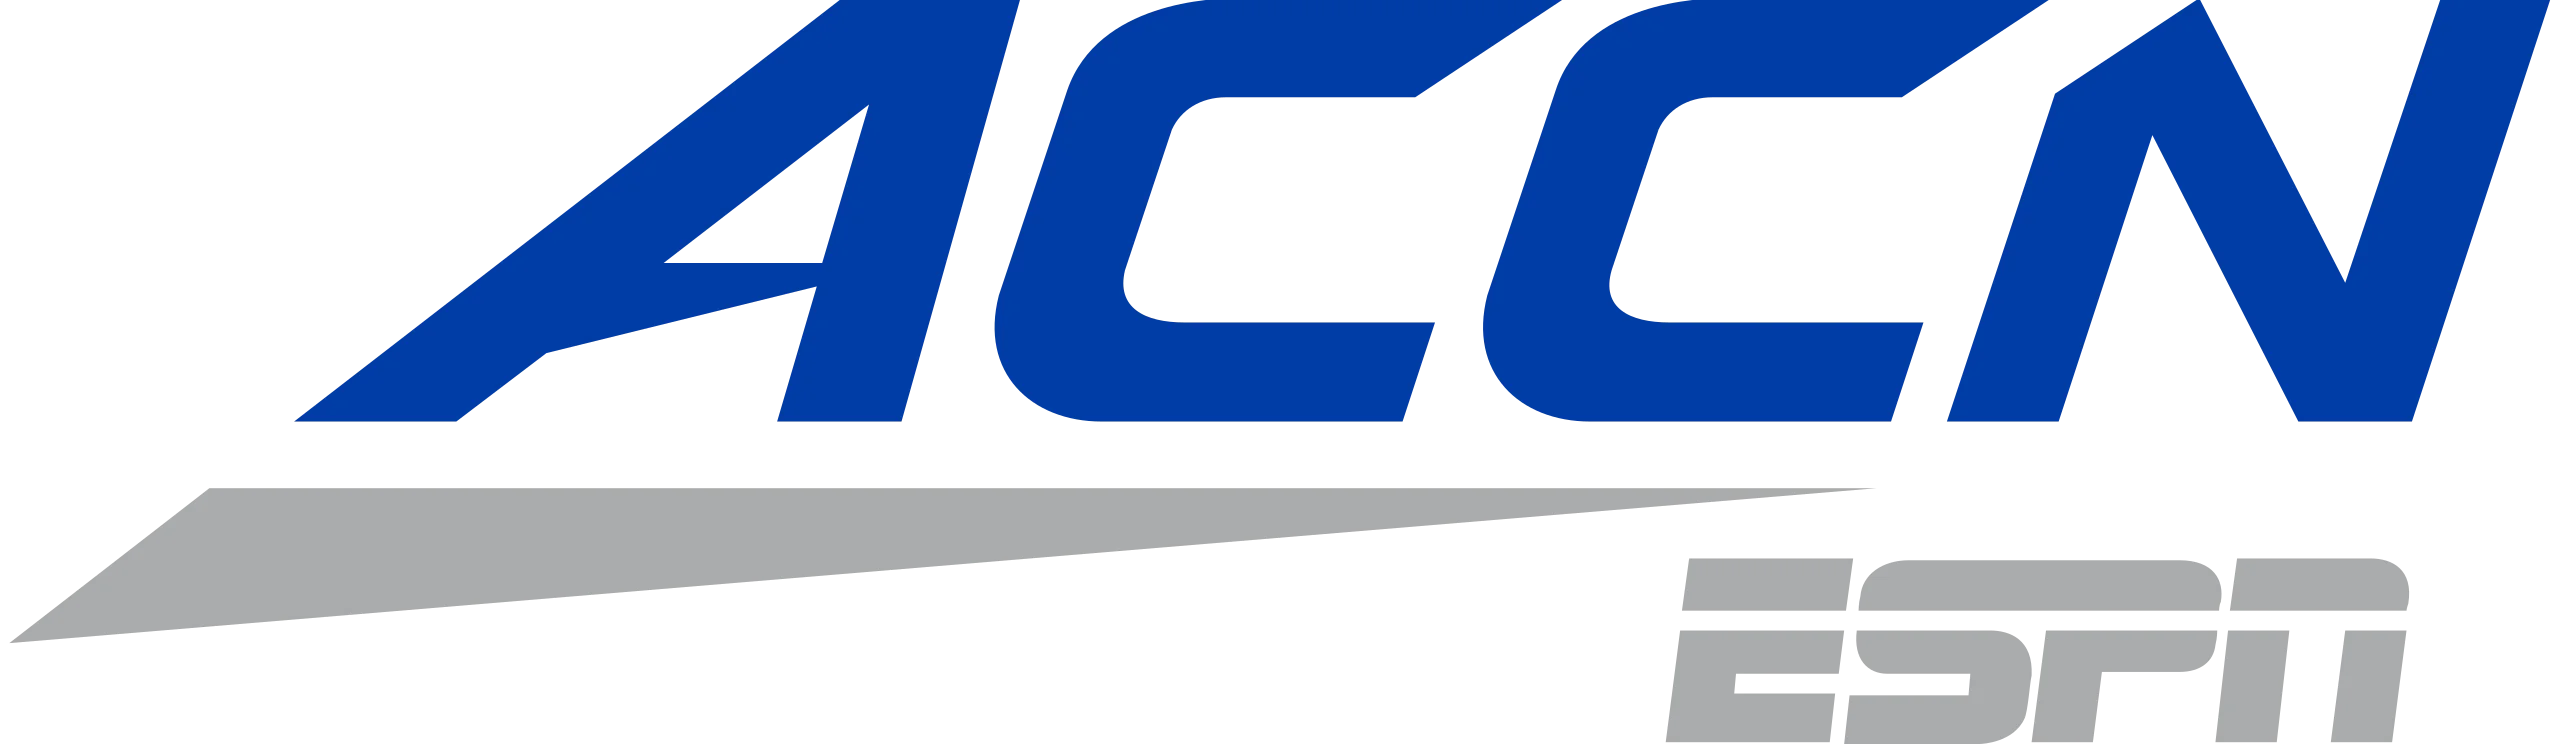 ACC Network logo